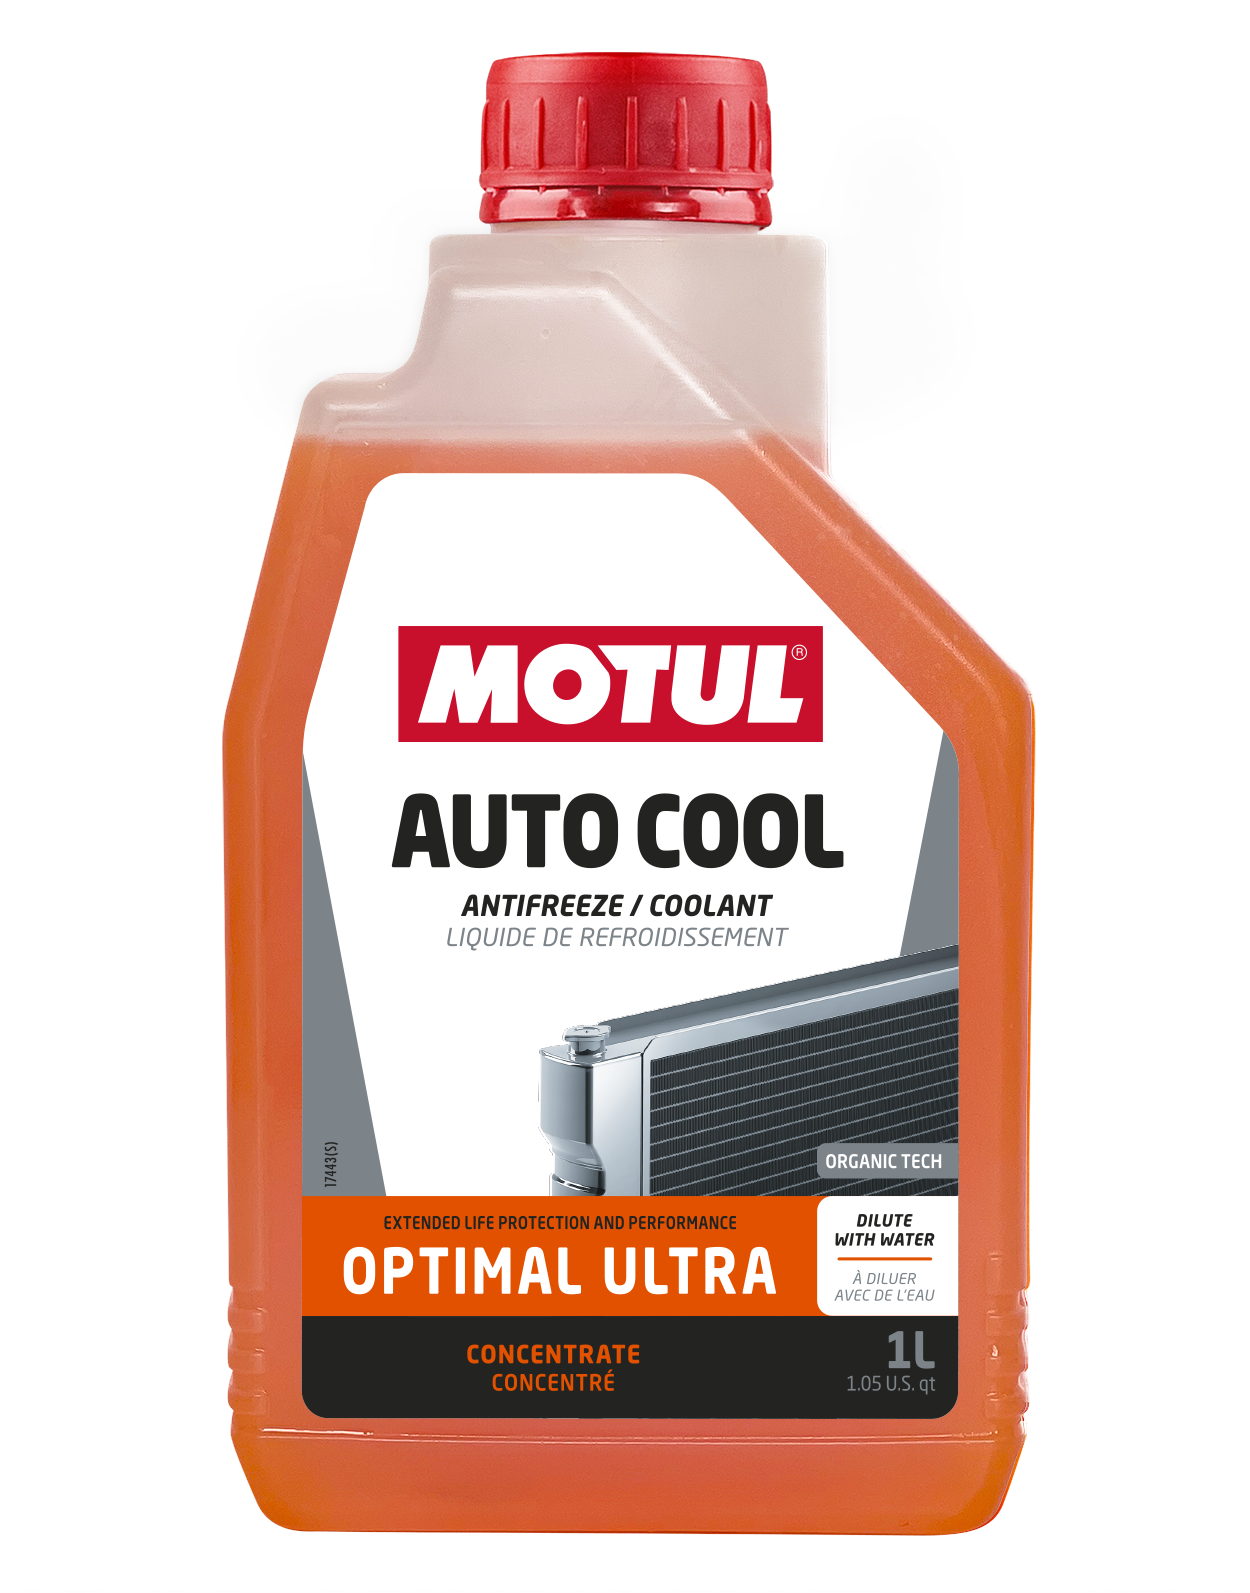 Motul AUTO COOL OPTIMAL ULTRA, 1 liter